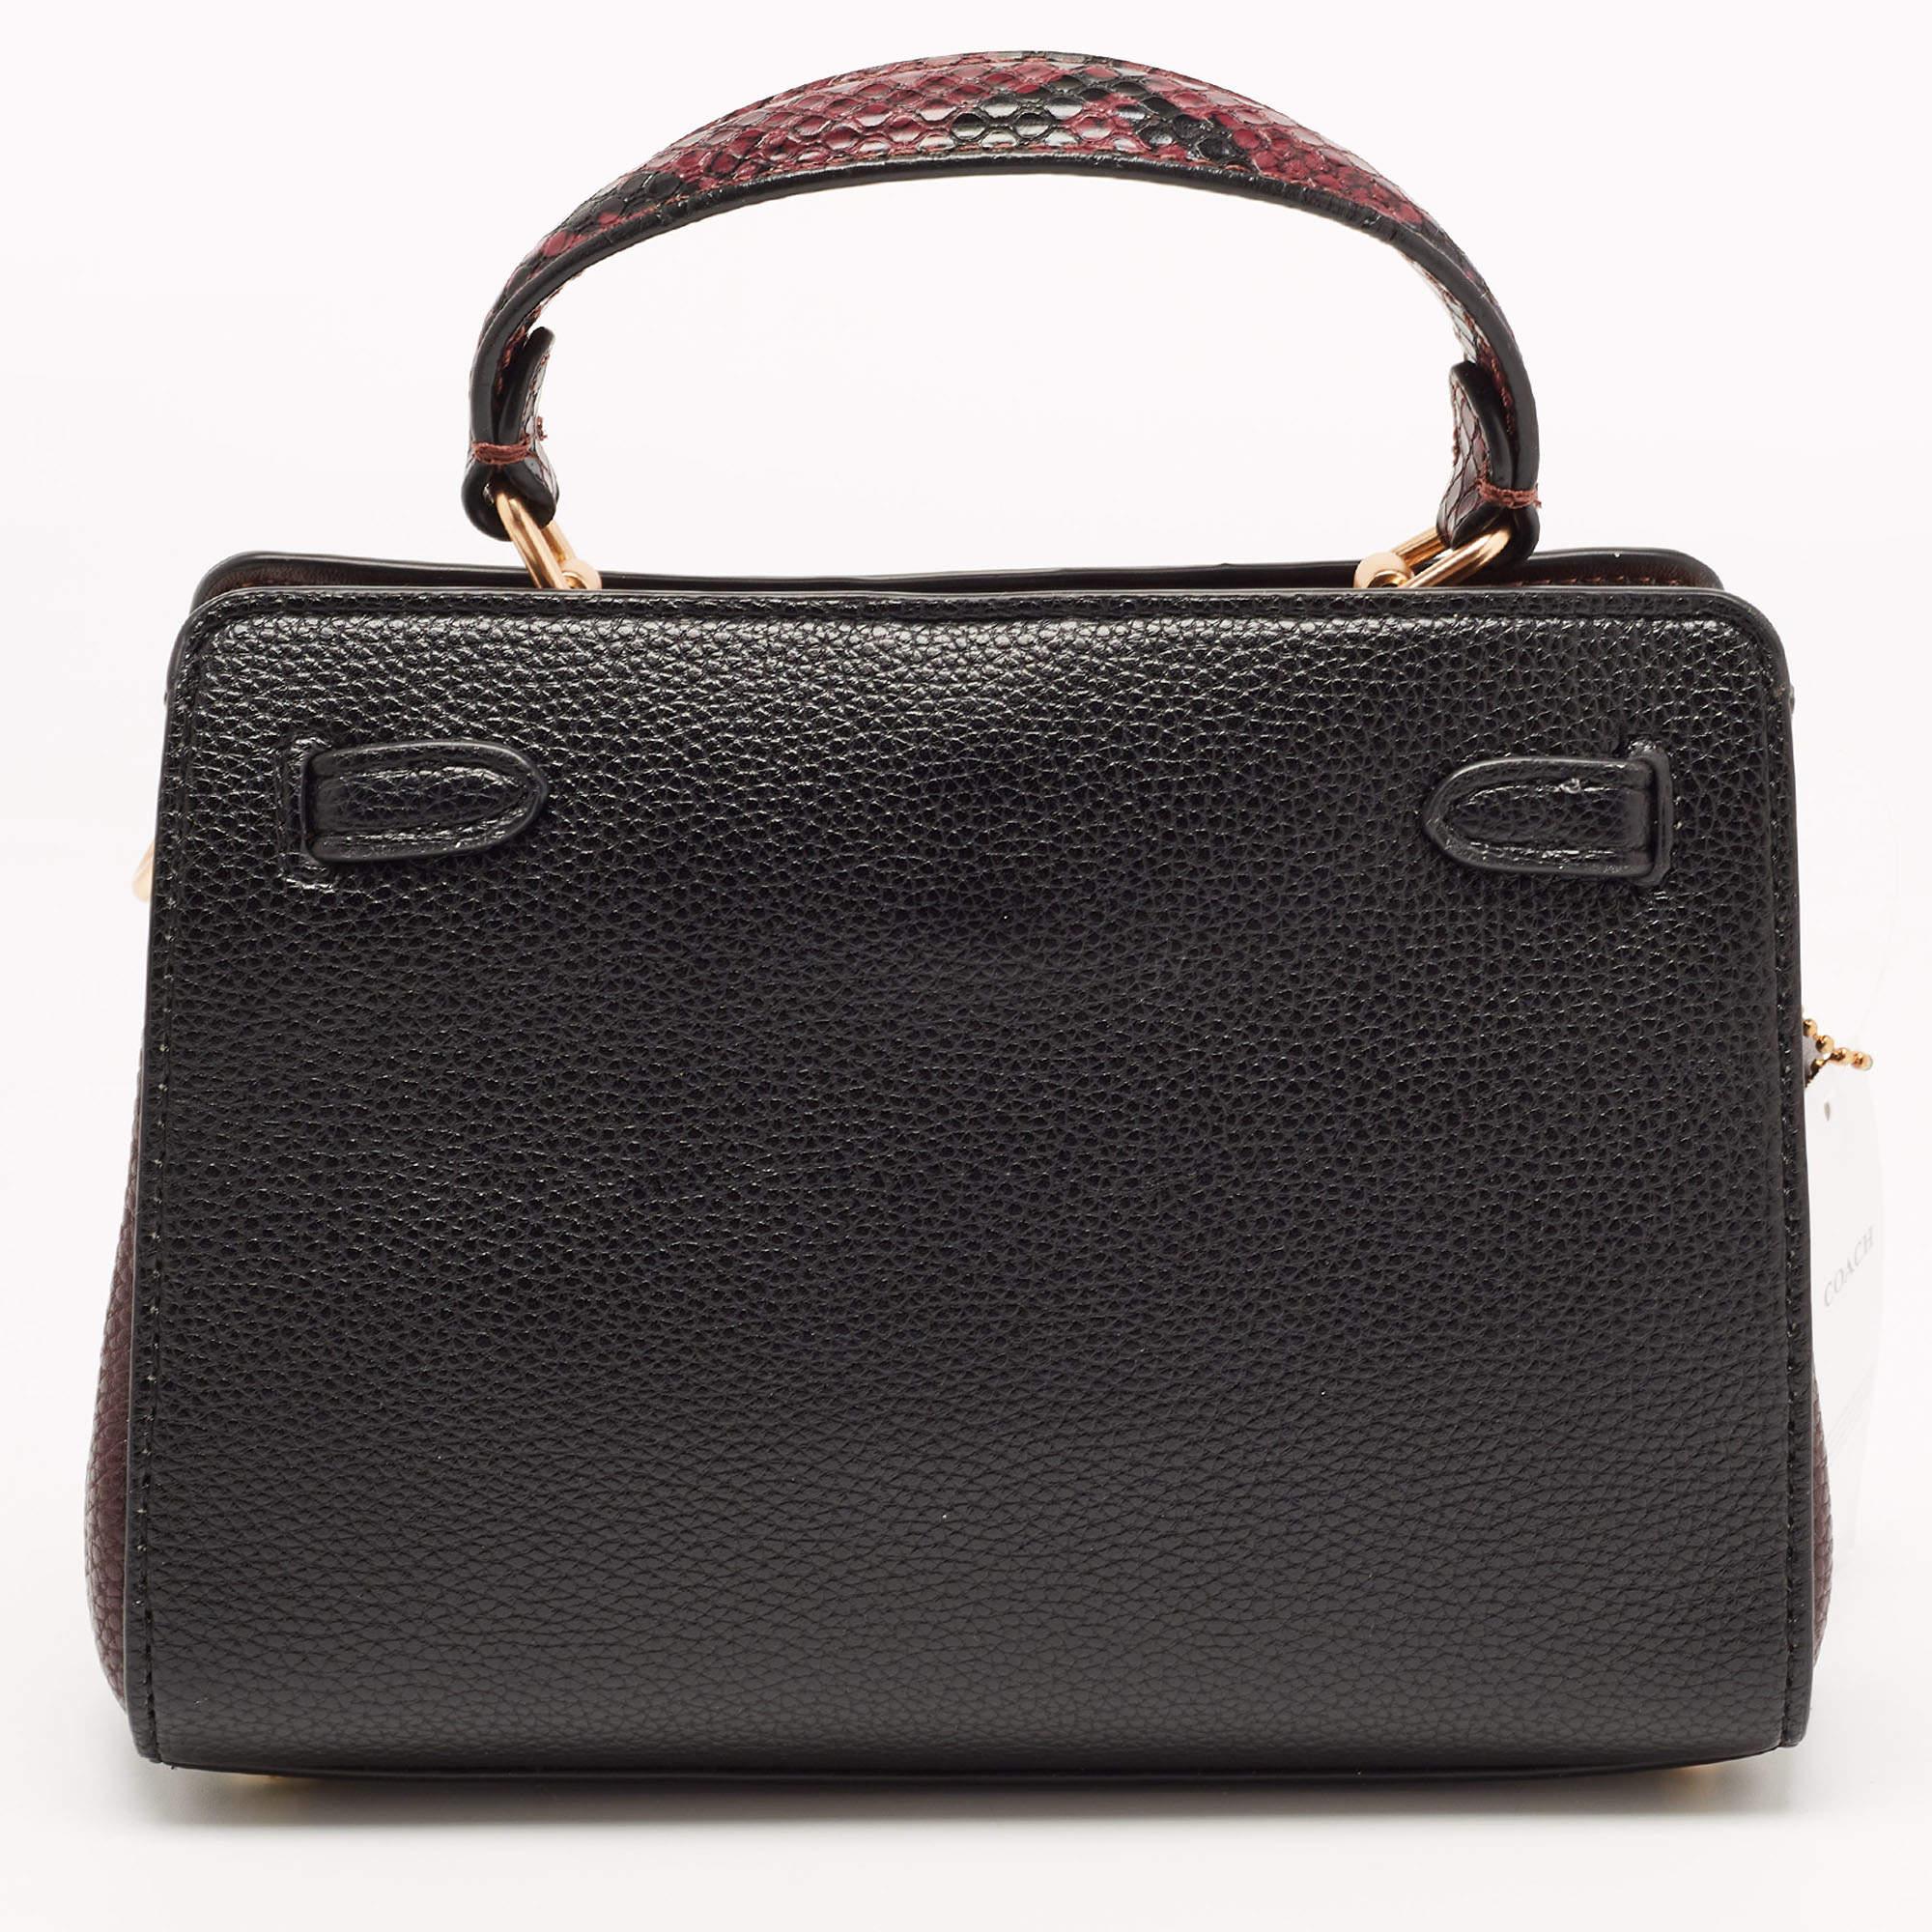 Coach Black/Burgundy Leather Mini Lane Top Handle Bag 2